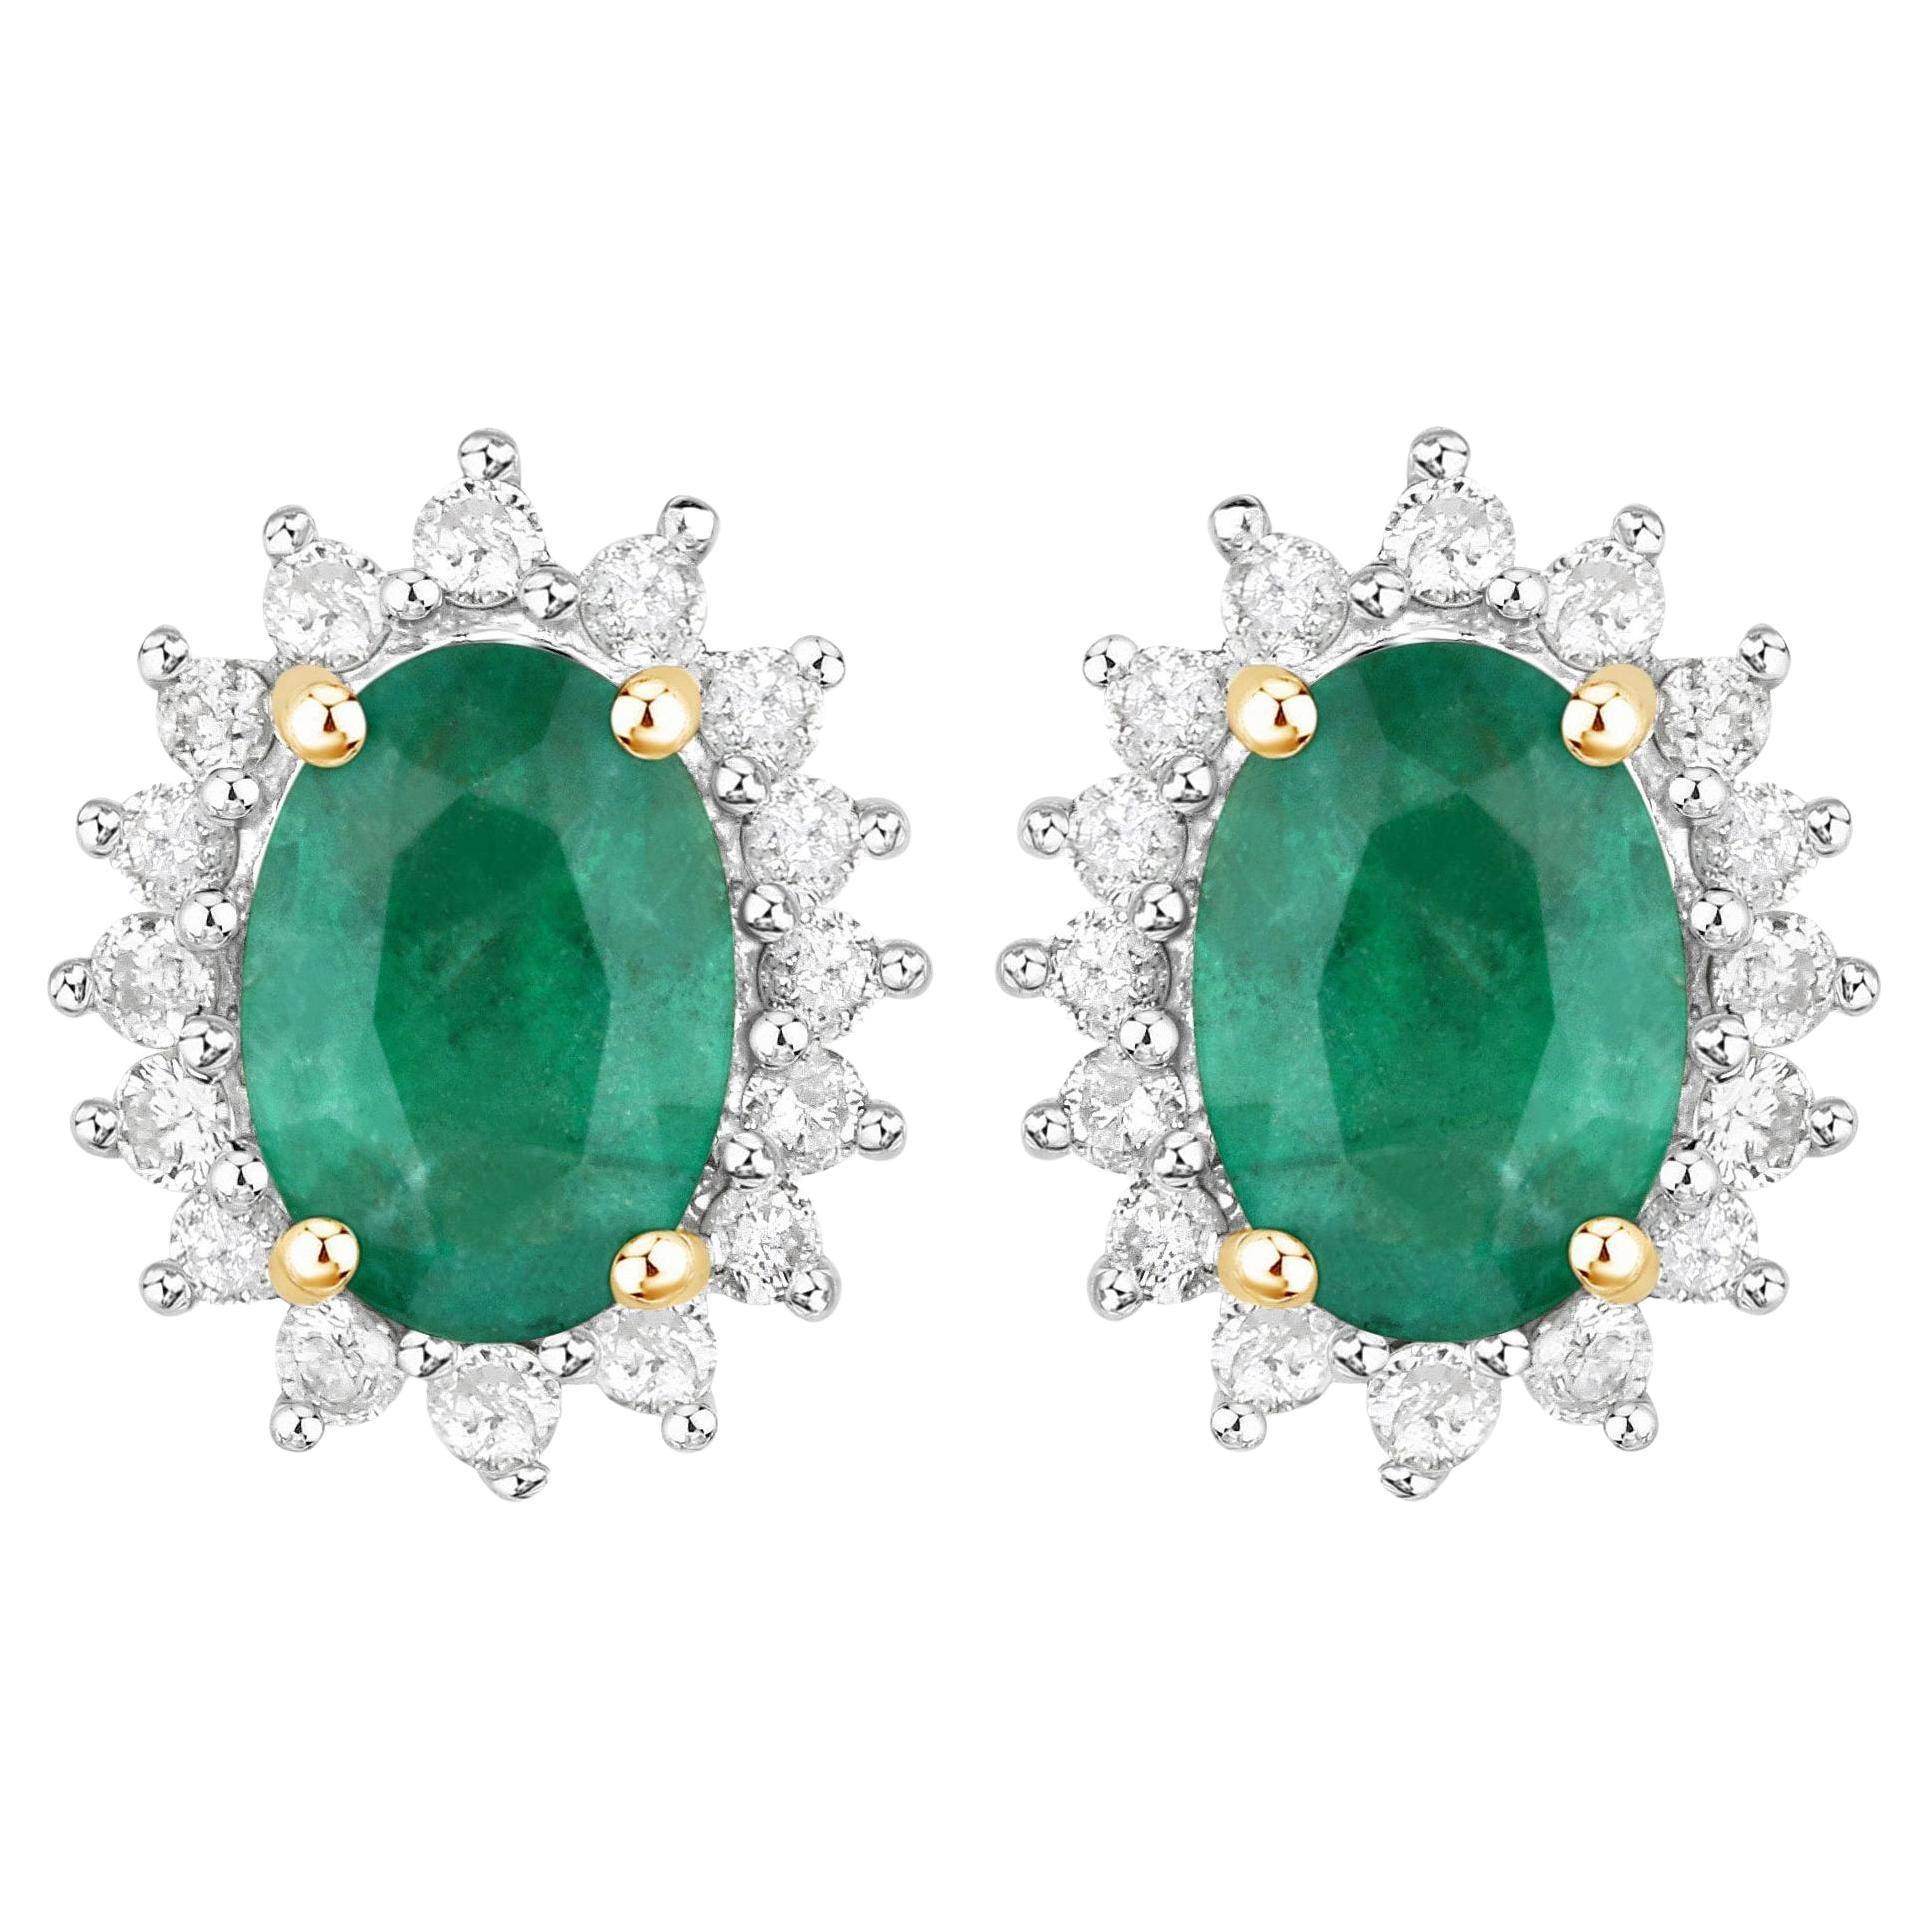 Natural Zambian Emerald and Diamond Halo Stud Earrings 1.90 Carats 14K Gold